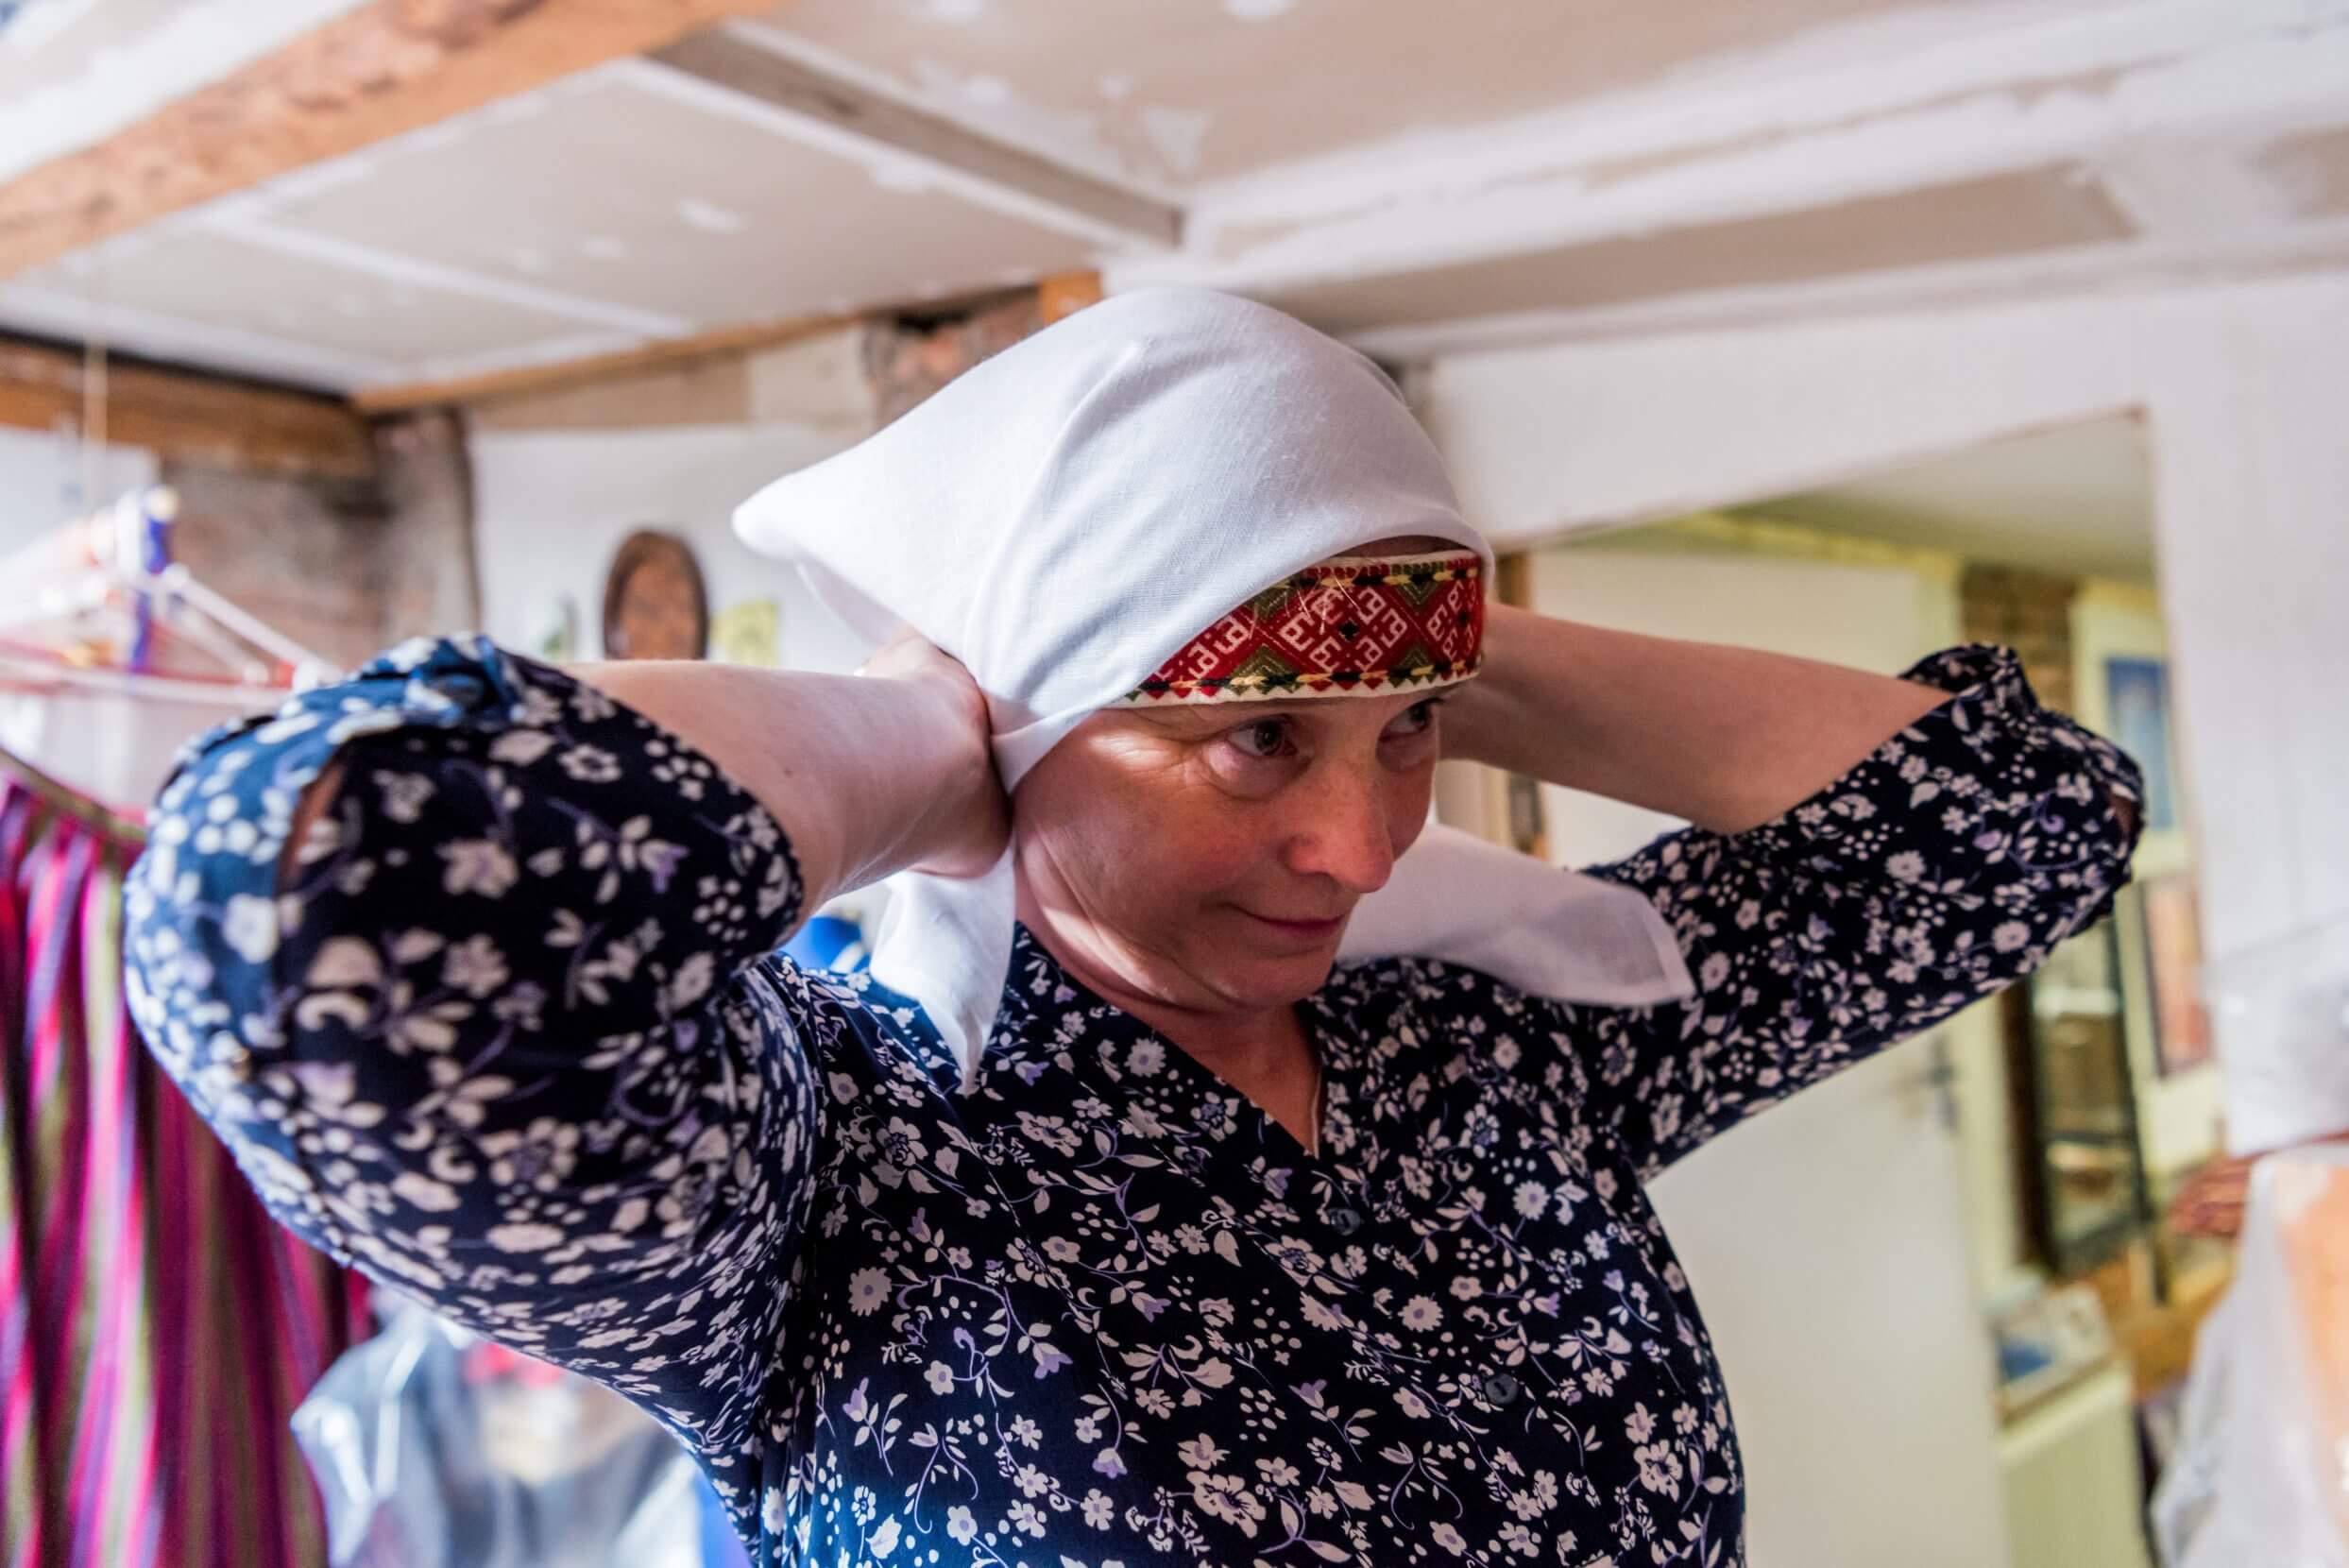 Woman in Latgalian folkwear In the Latgalian folk traditions of Latvia, a linen head covering reveals a woman’s status as married